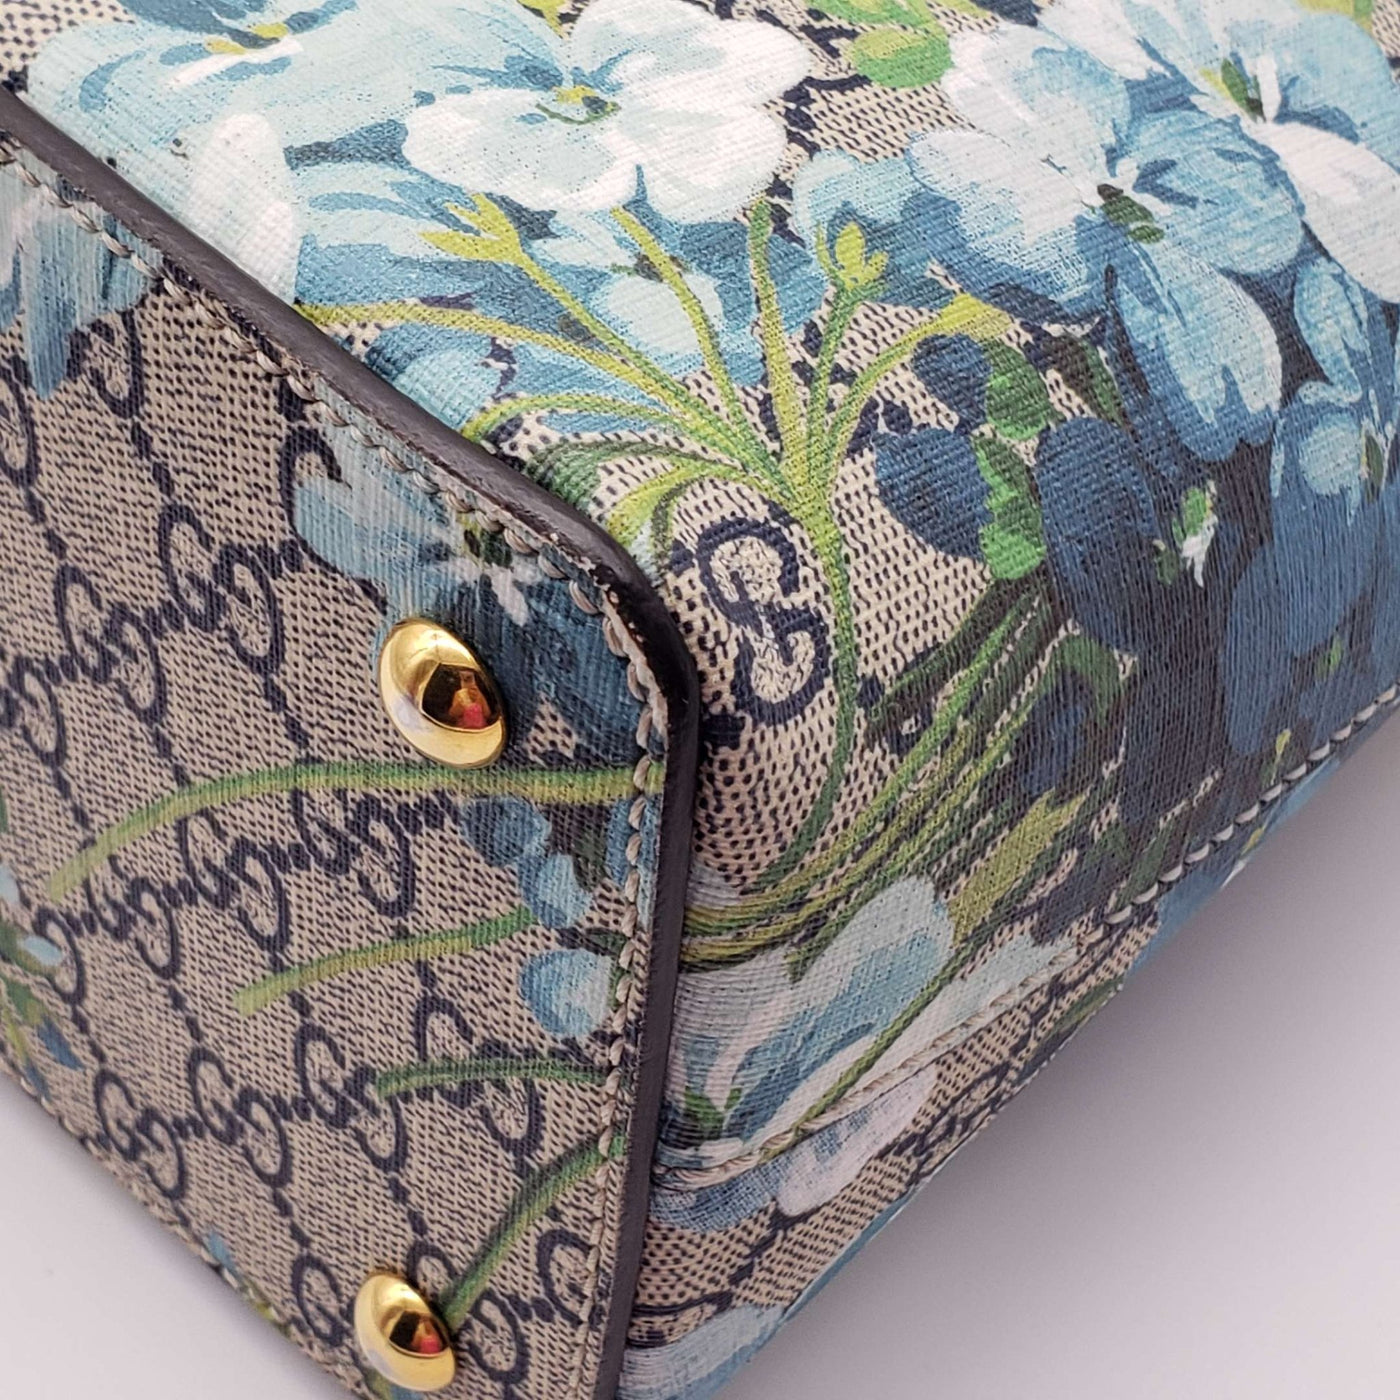 Gucci Supreme Floral Bloom Blue Hand Bag and Shoulder Bag - Luxury Cheaper